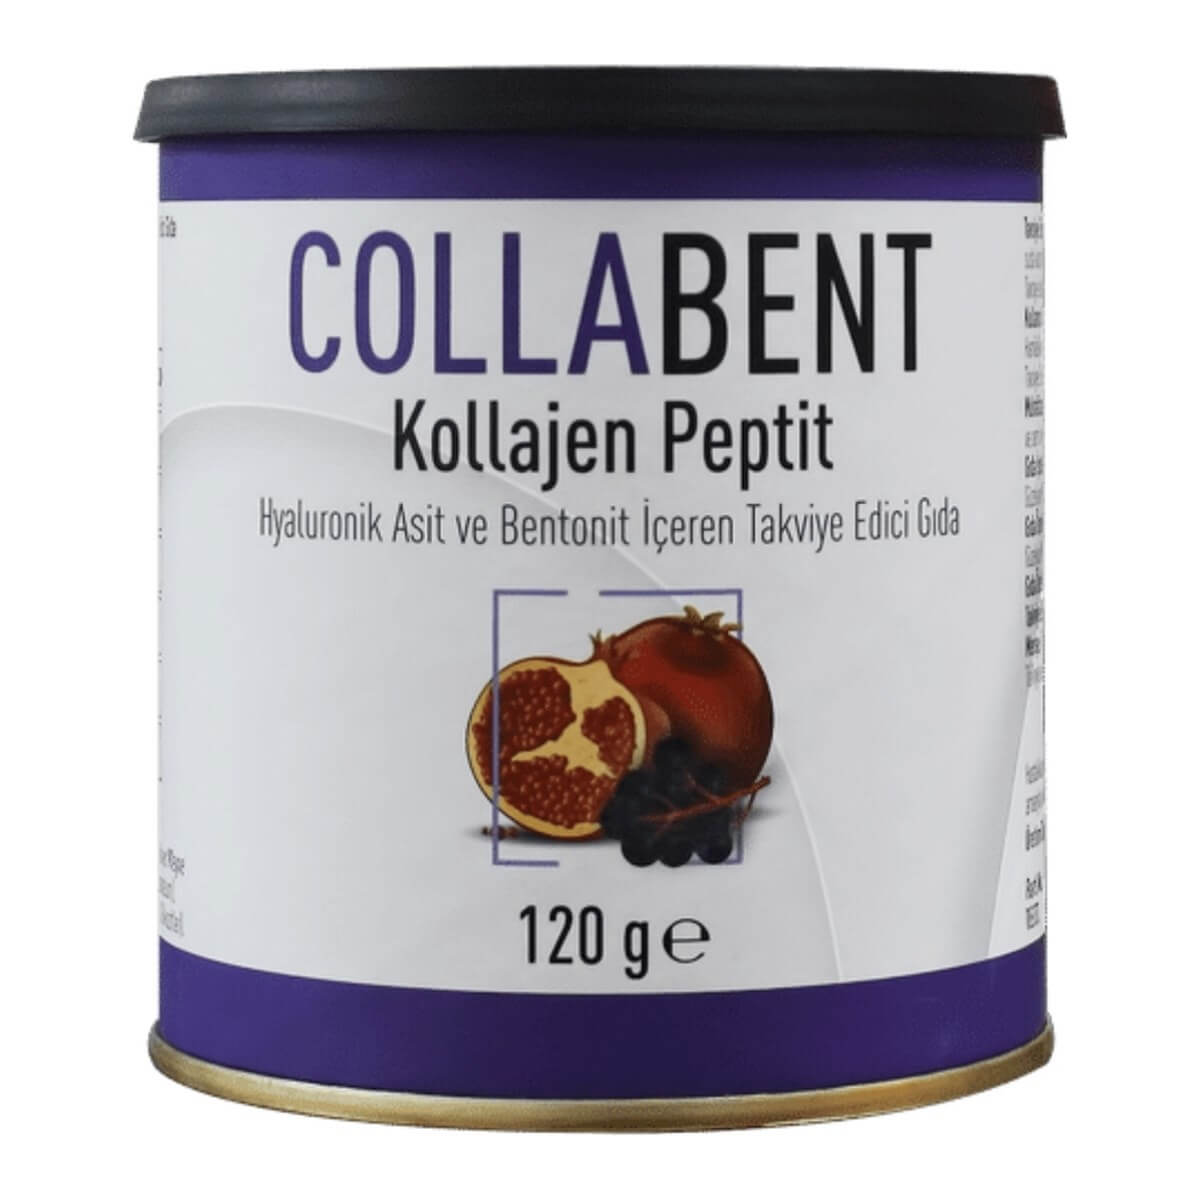  Collabent Kollajen Peptit Hyaluronik Asit ve Bentonit Collagen 120 GR